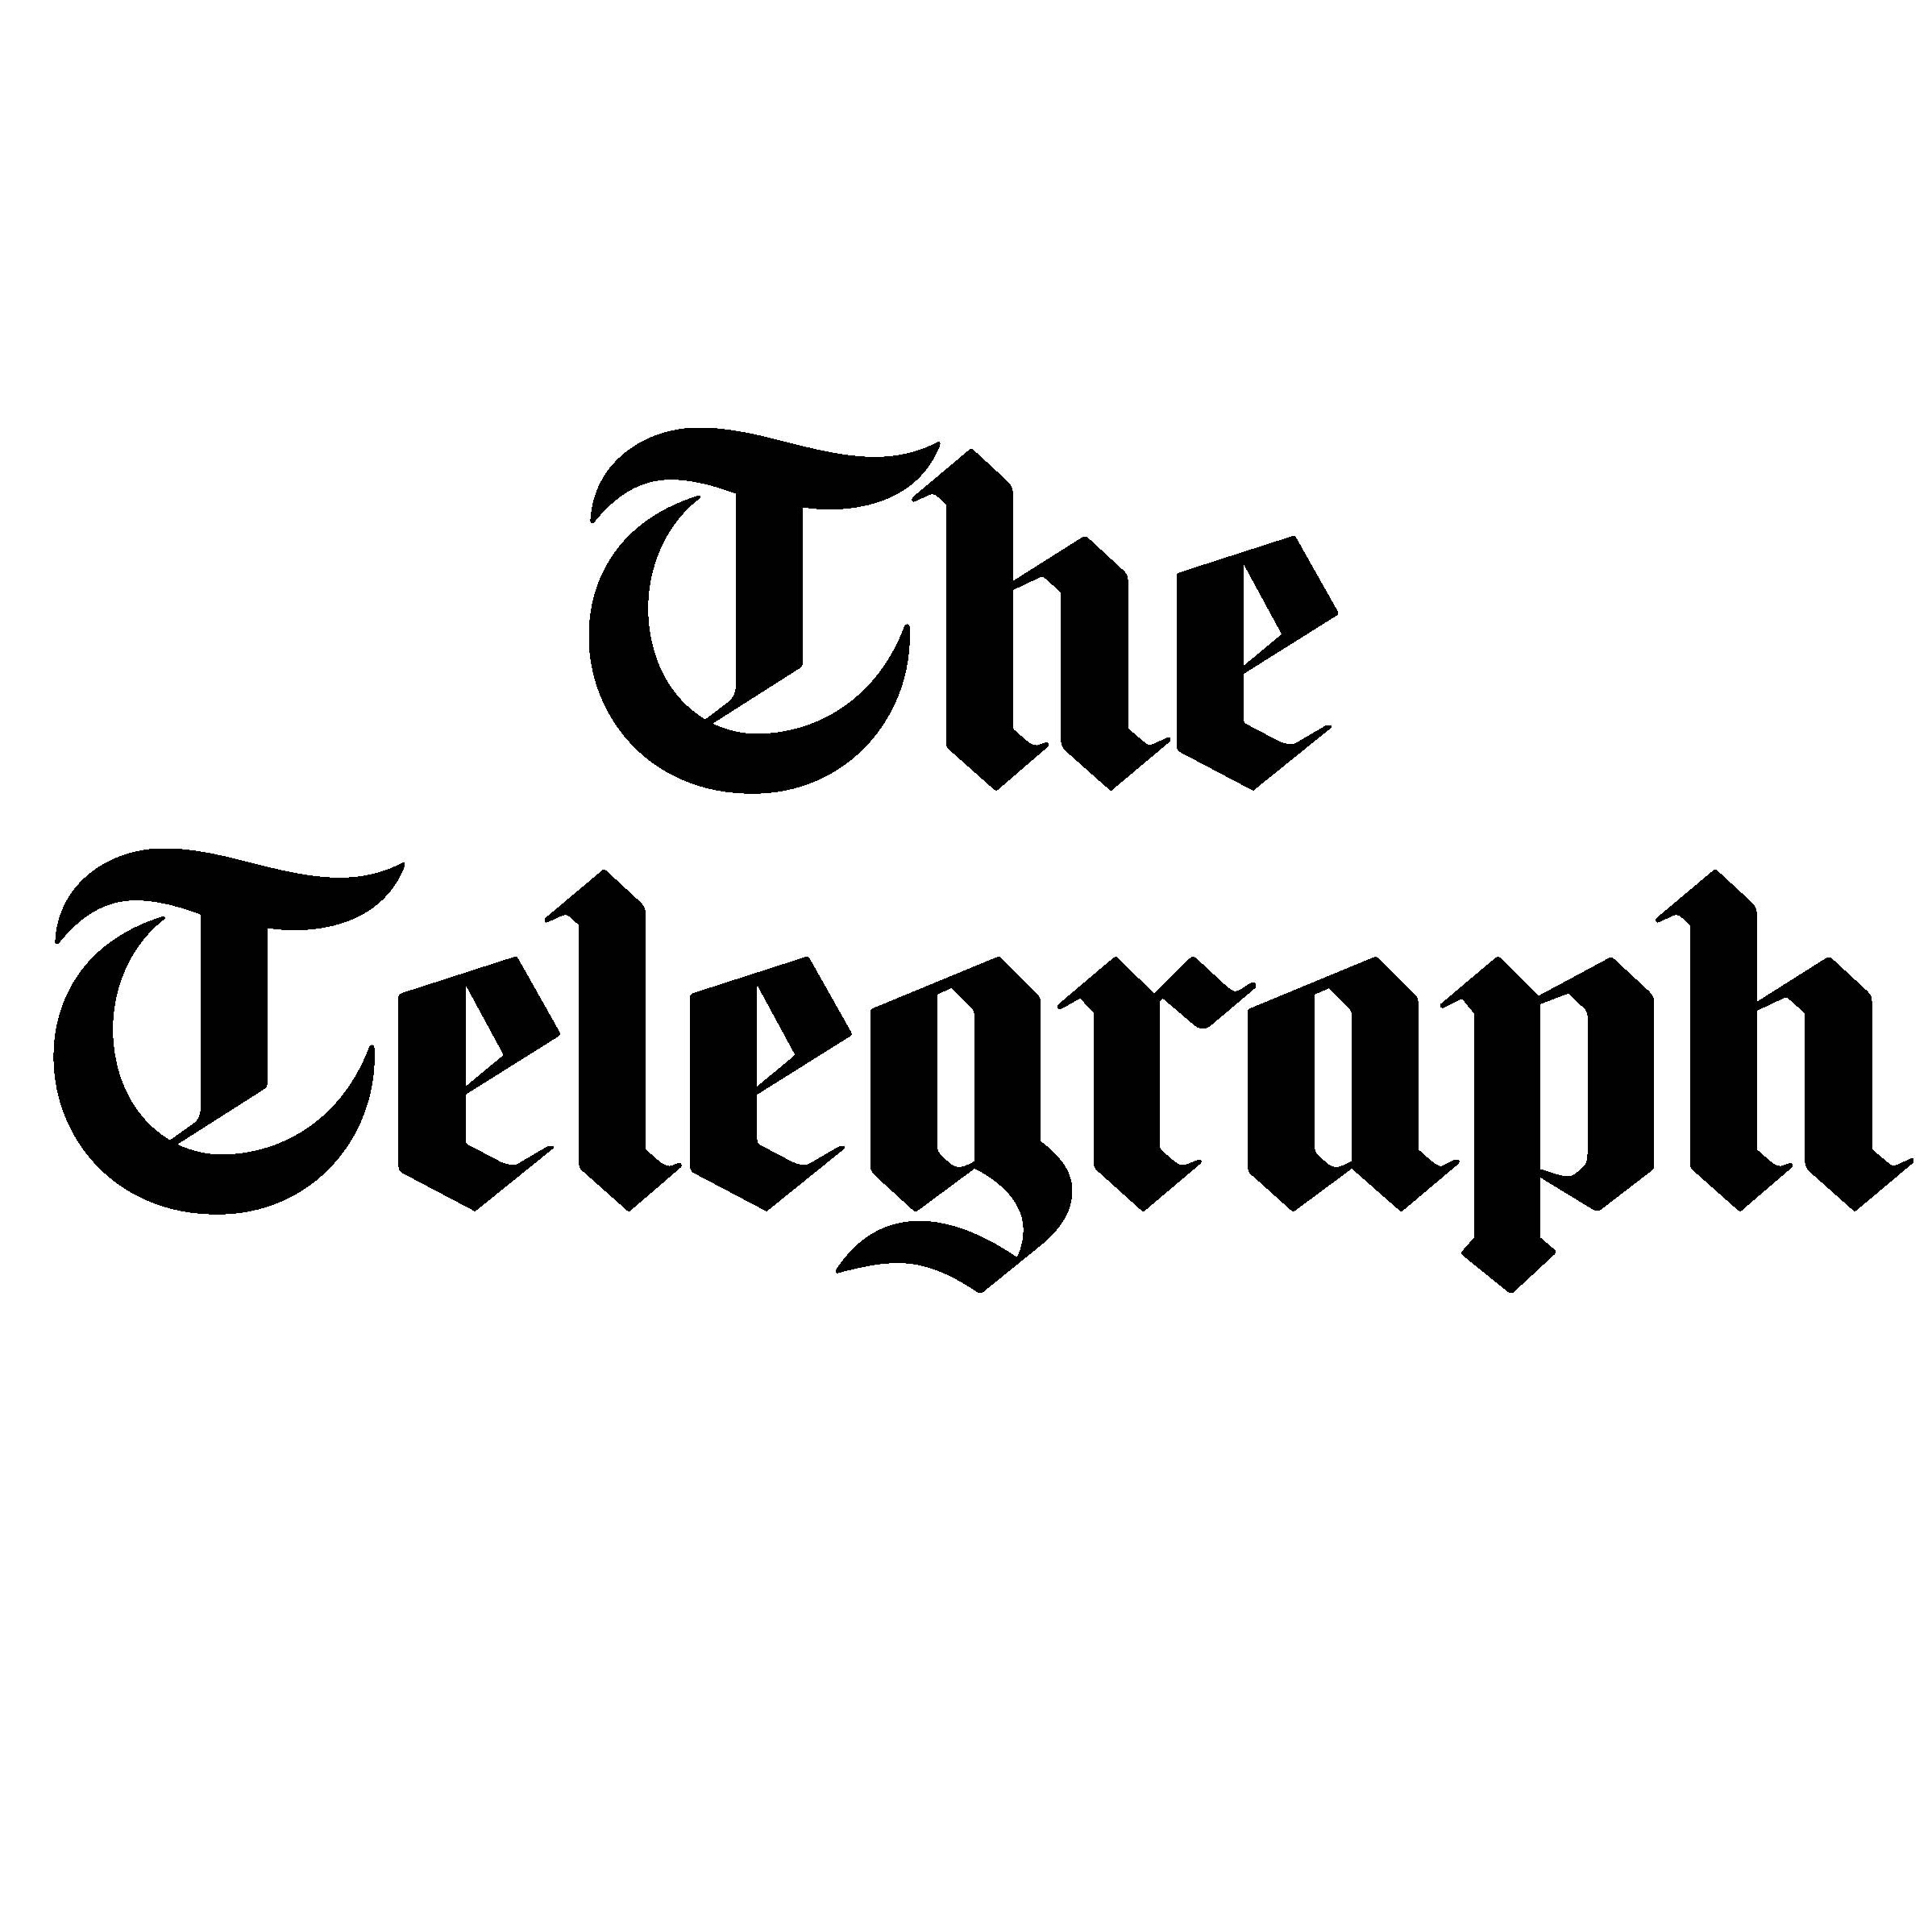 The telegraph.jpg